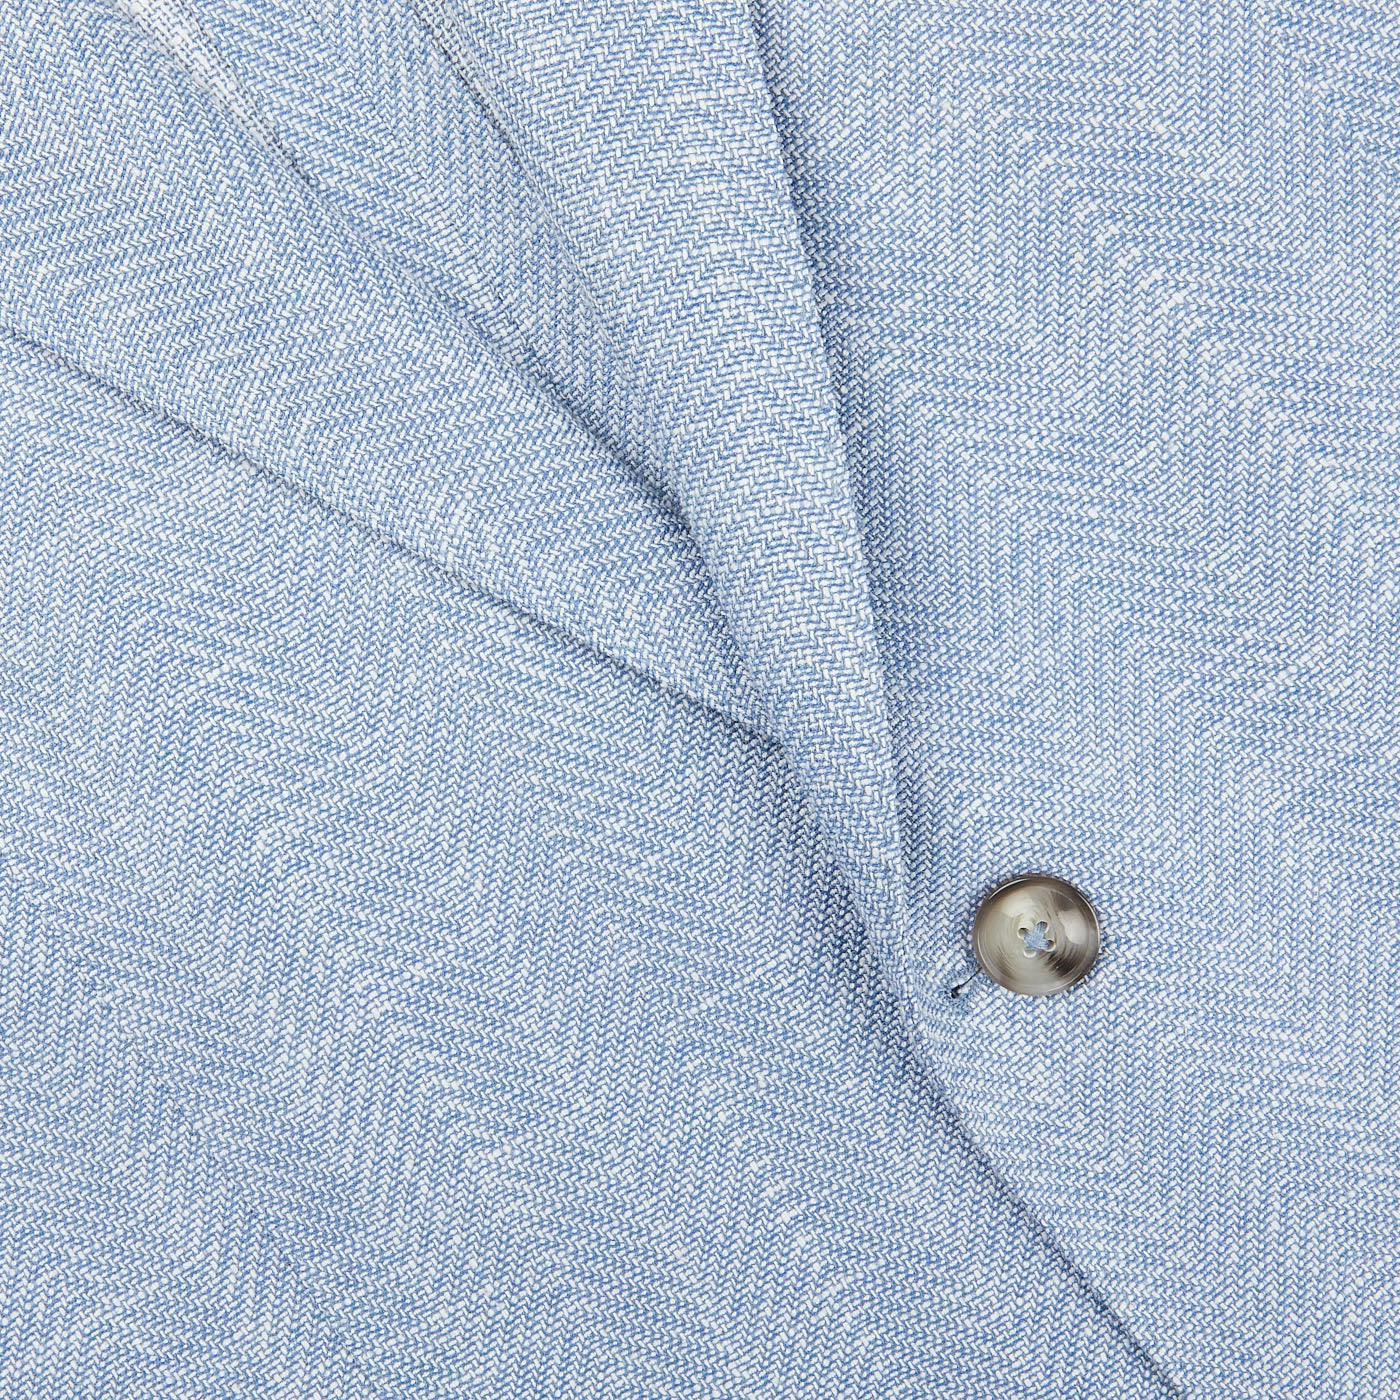 A close up image of an Eduard Dressler Light Blue Herringbone Cotton Linen Sendrik Blazer.